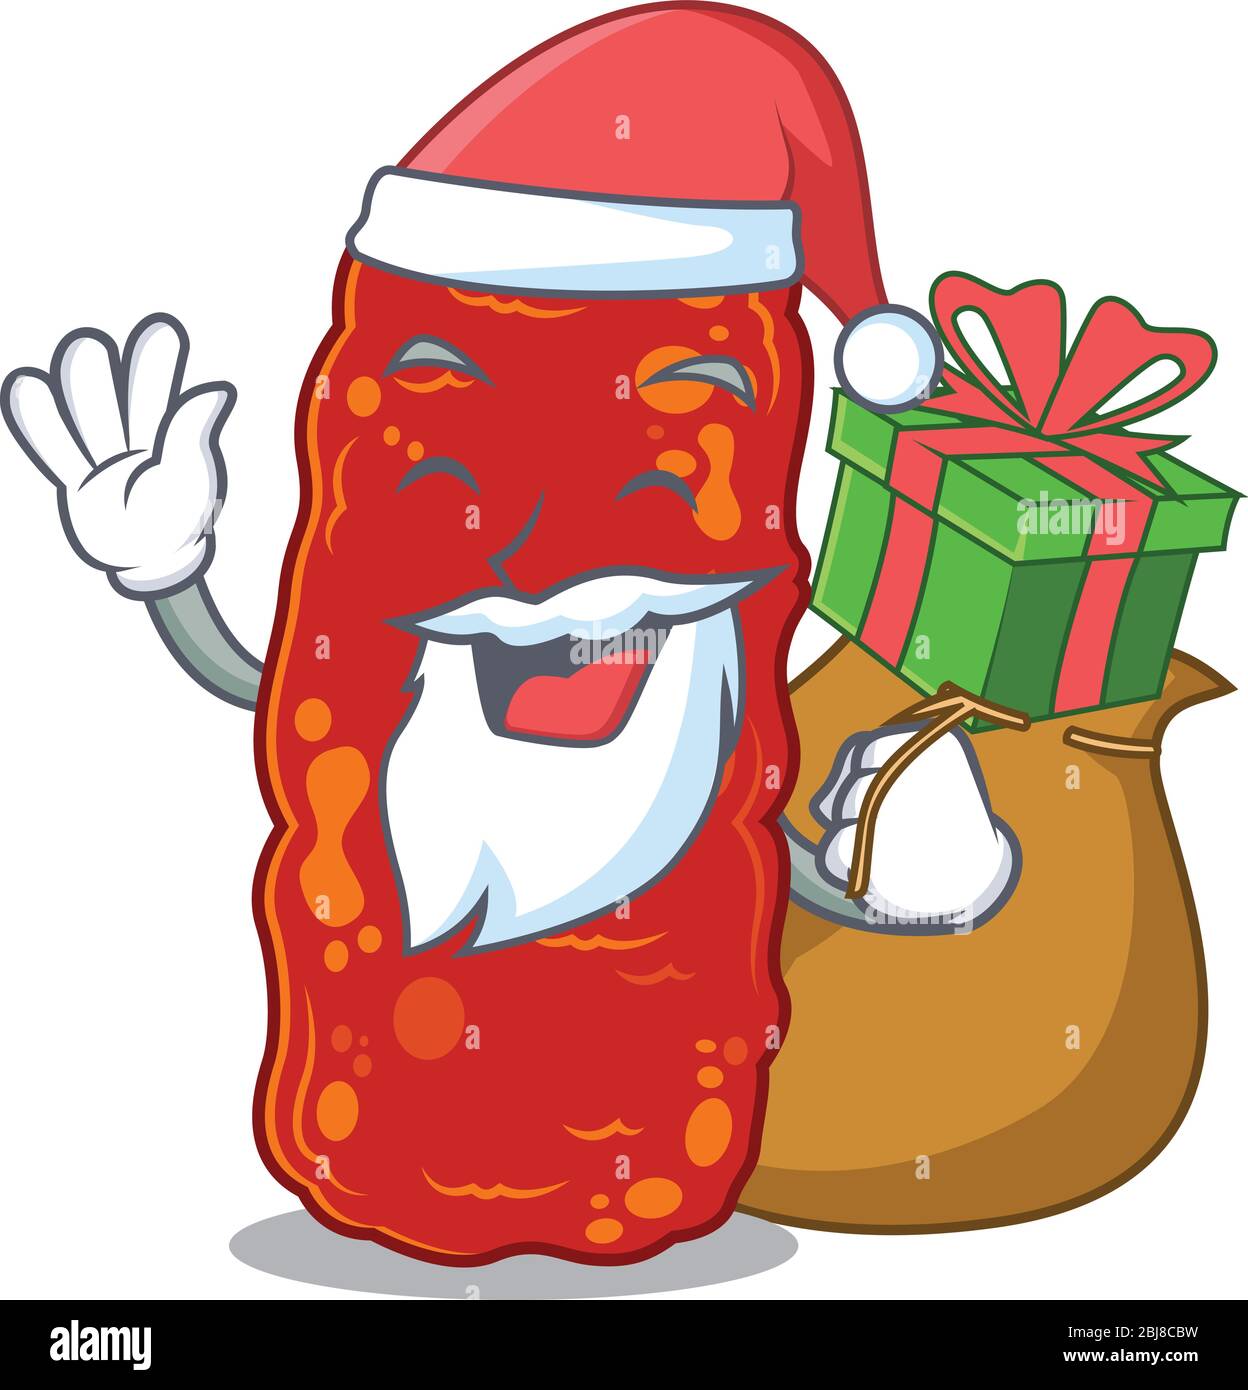 Cartoon design of acinetobacter bacteria Santa with Christmas gift Stock Vector